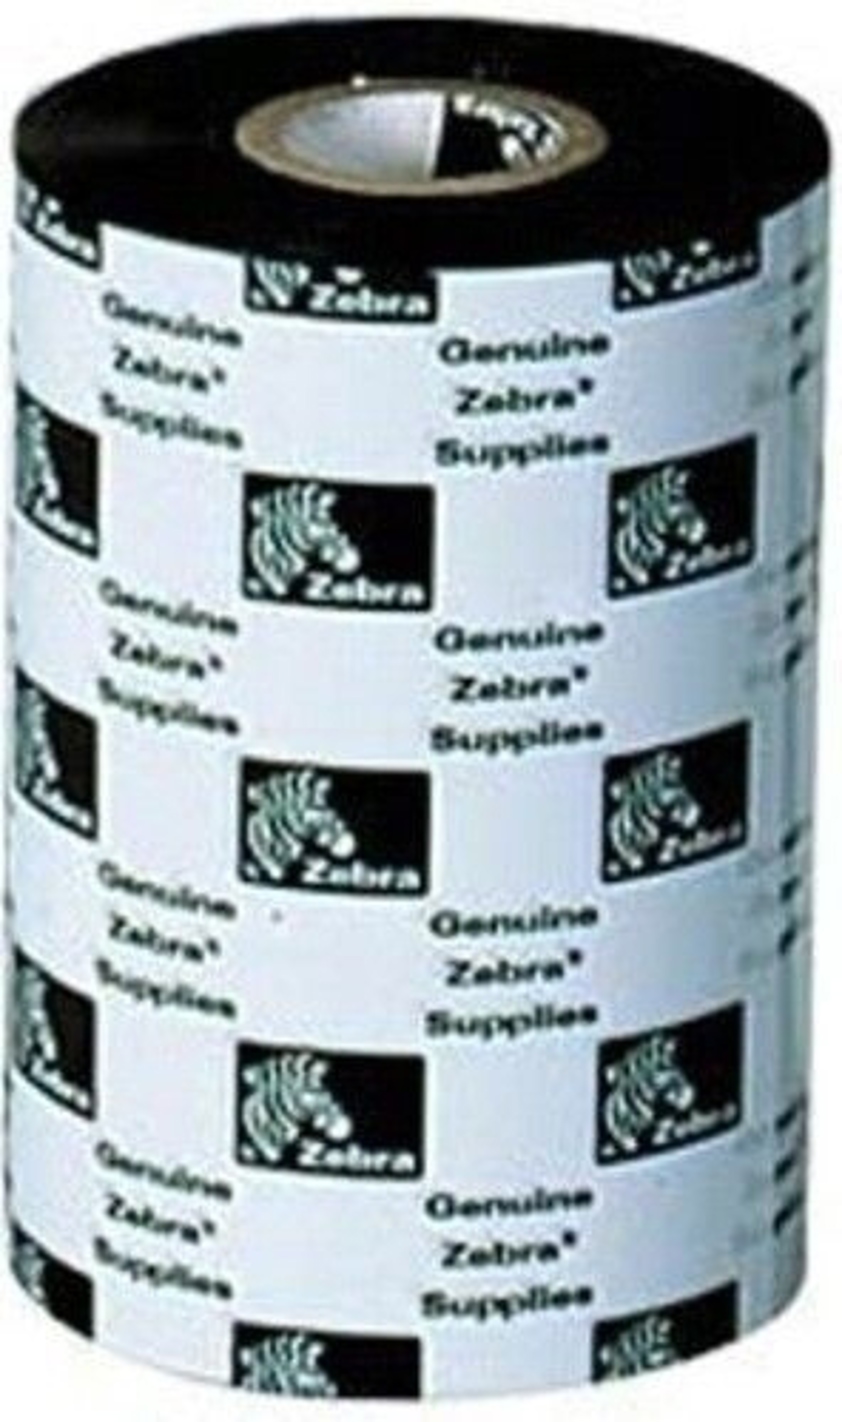 Zebra 3200 Wax/Resin Ribbon 84mm x 74m printer ribbon